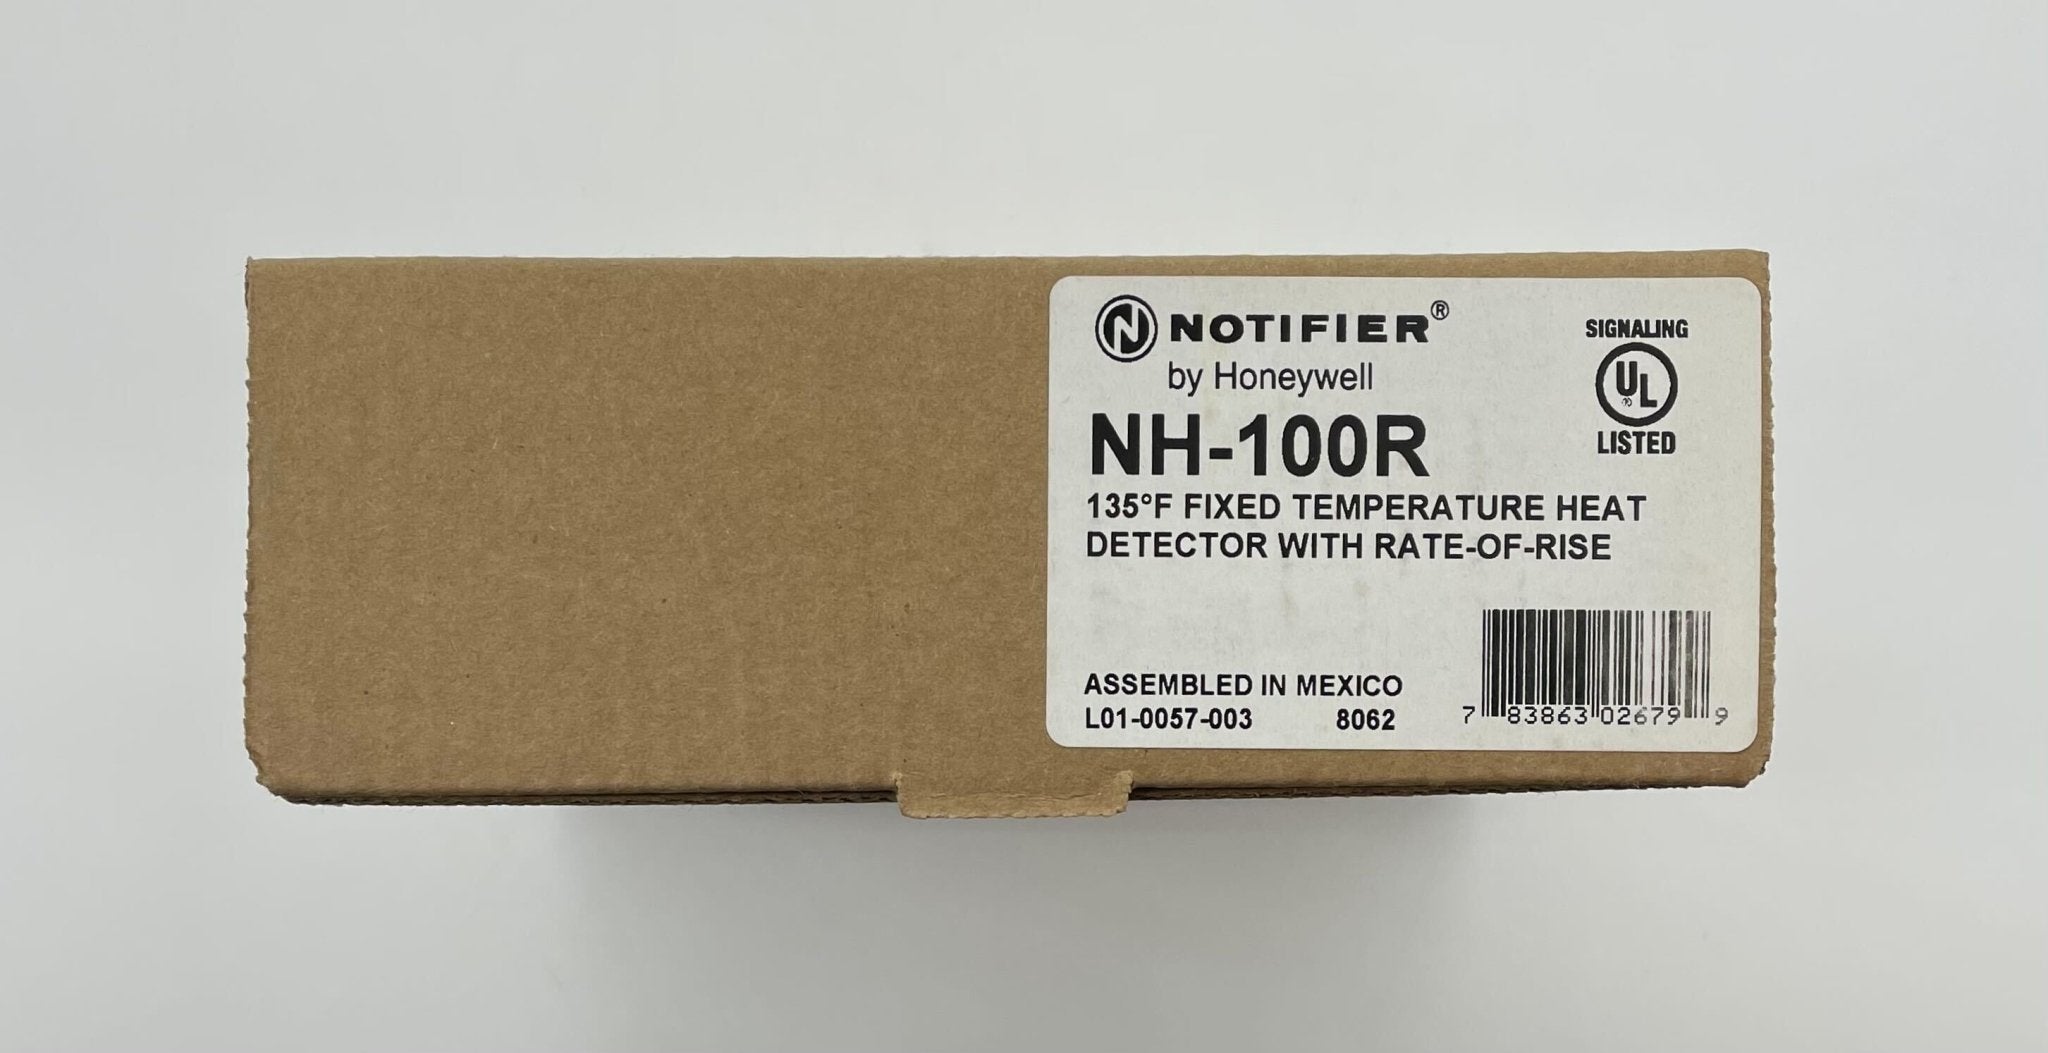 Notifier NH-100R - The Fire Alarm Supplier